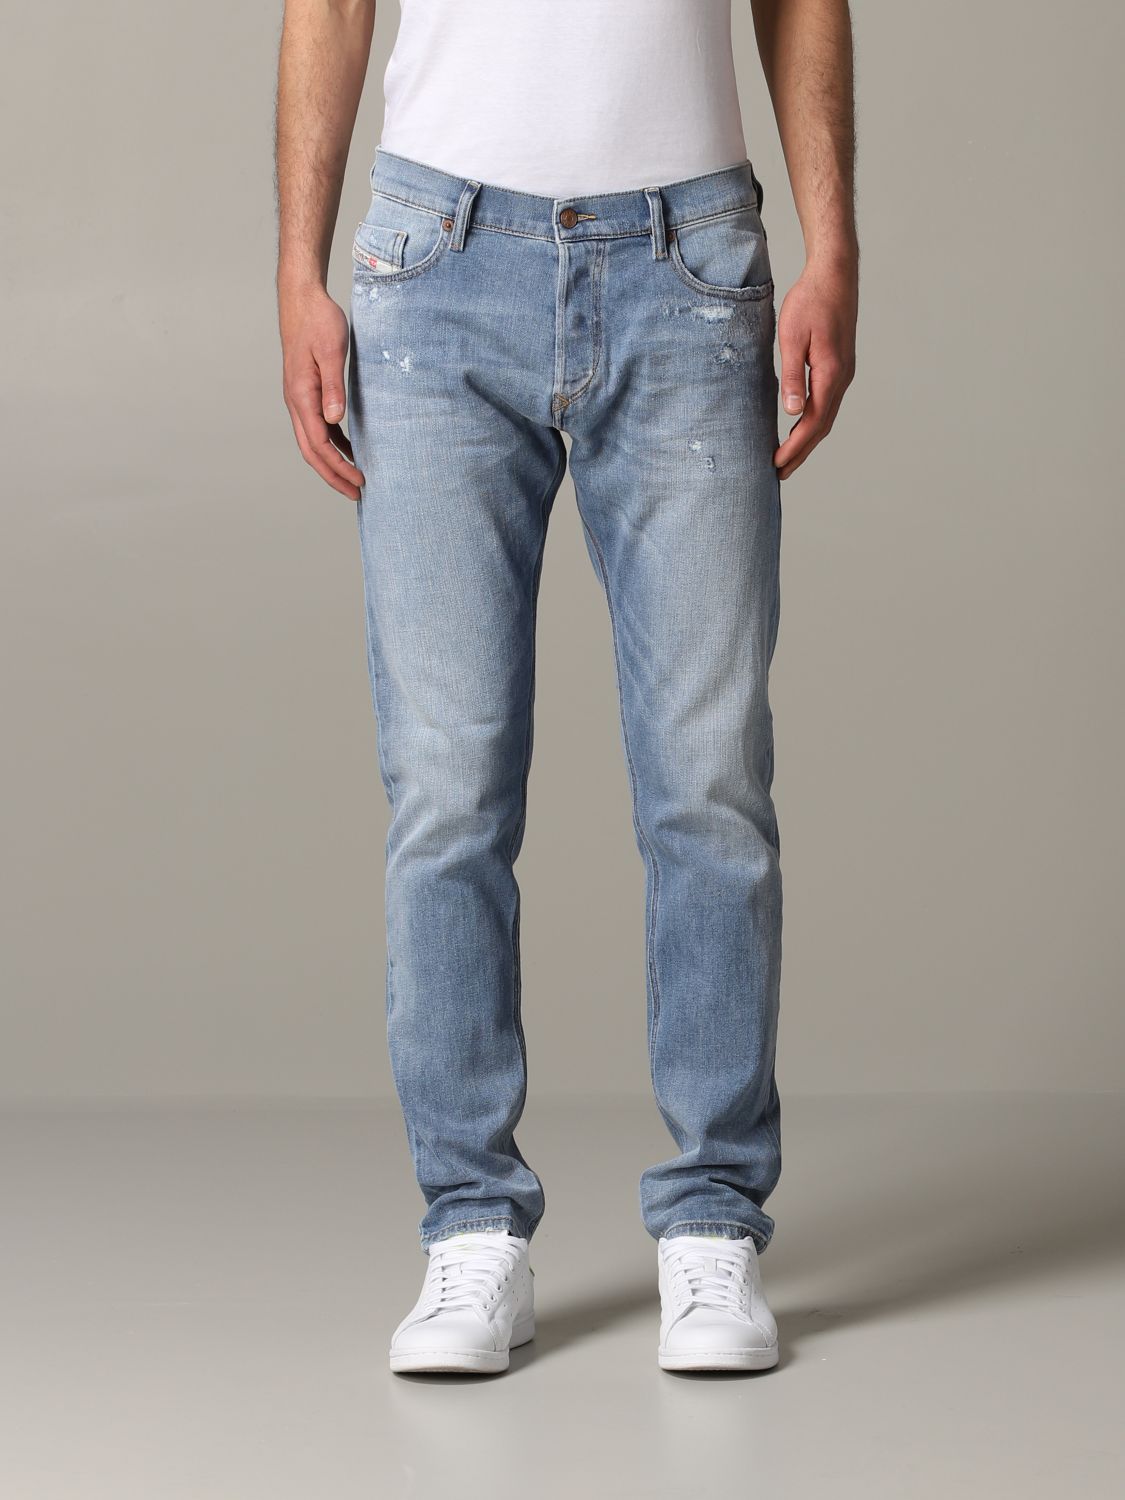 Diesel Outlet: Tepphar-x slim carrot fit jeans - Denim | Diesel jeans ...